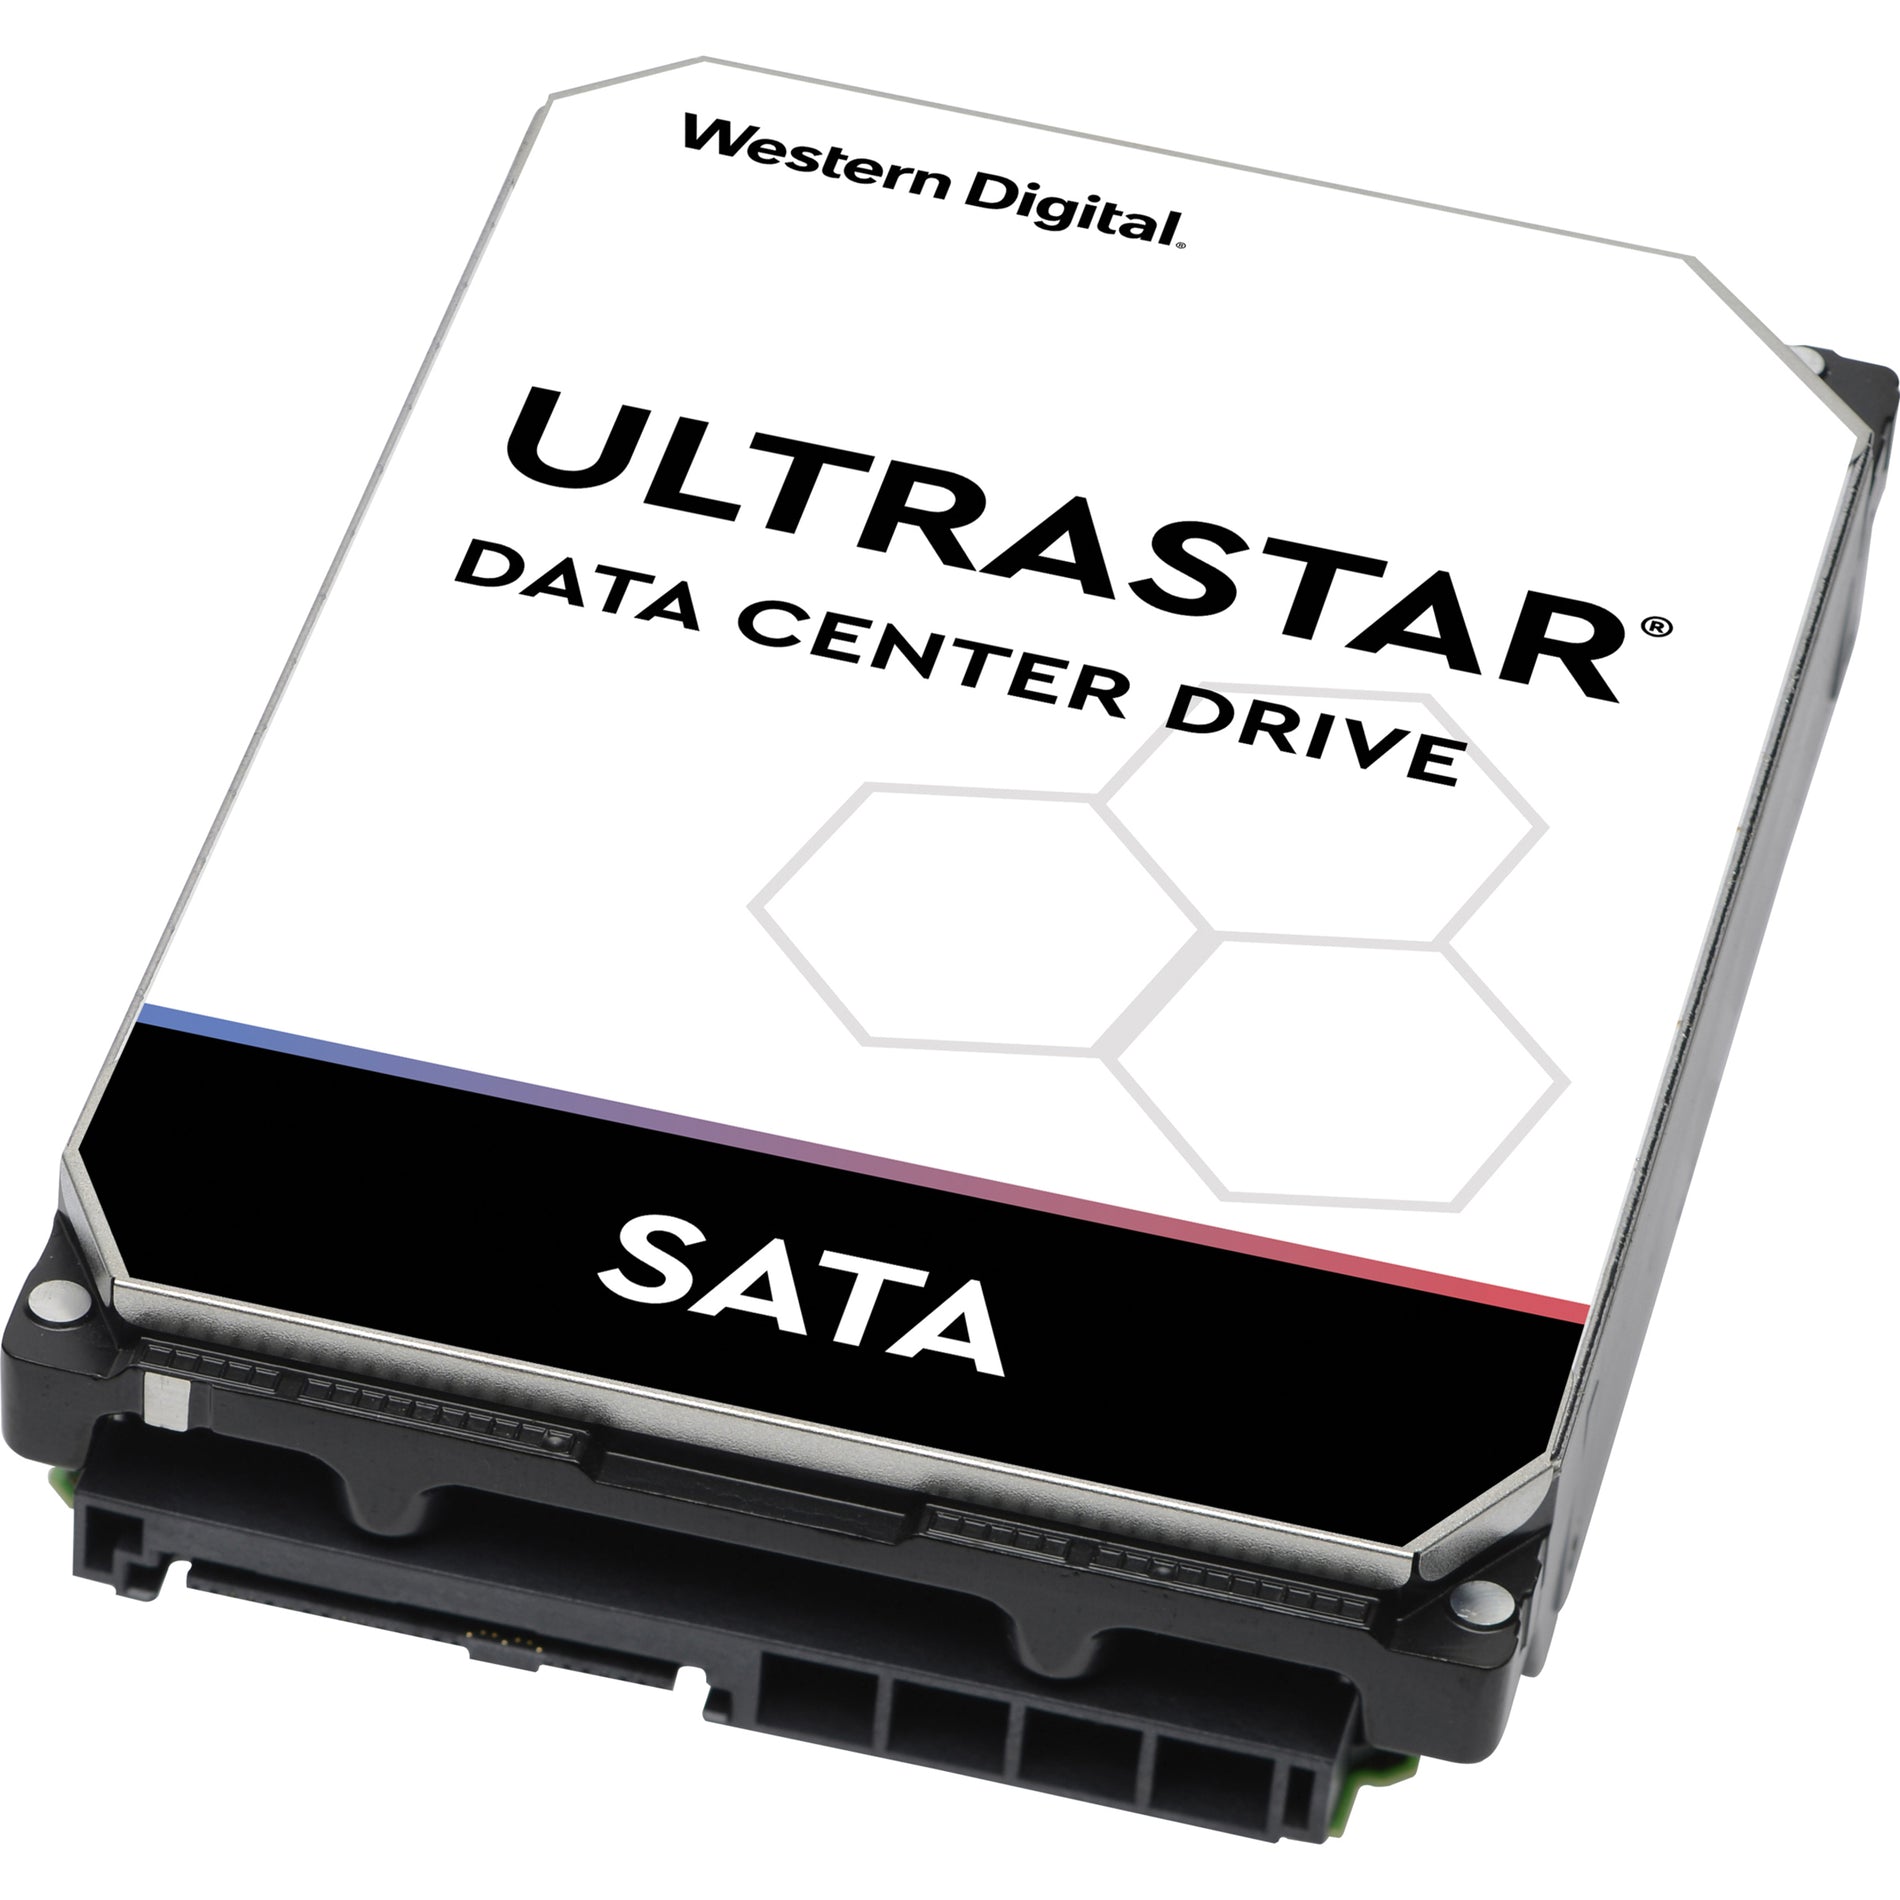 Western Digital Ultrastar DC HC530 14TB SATA Hard Drive [Discontinued]